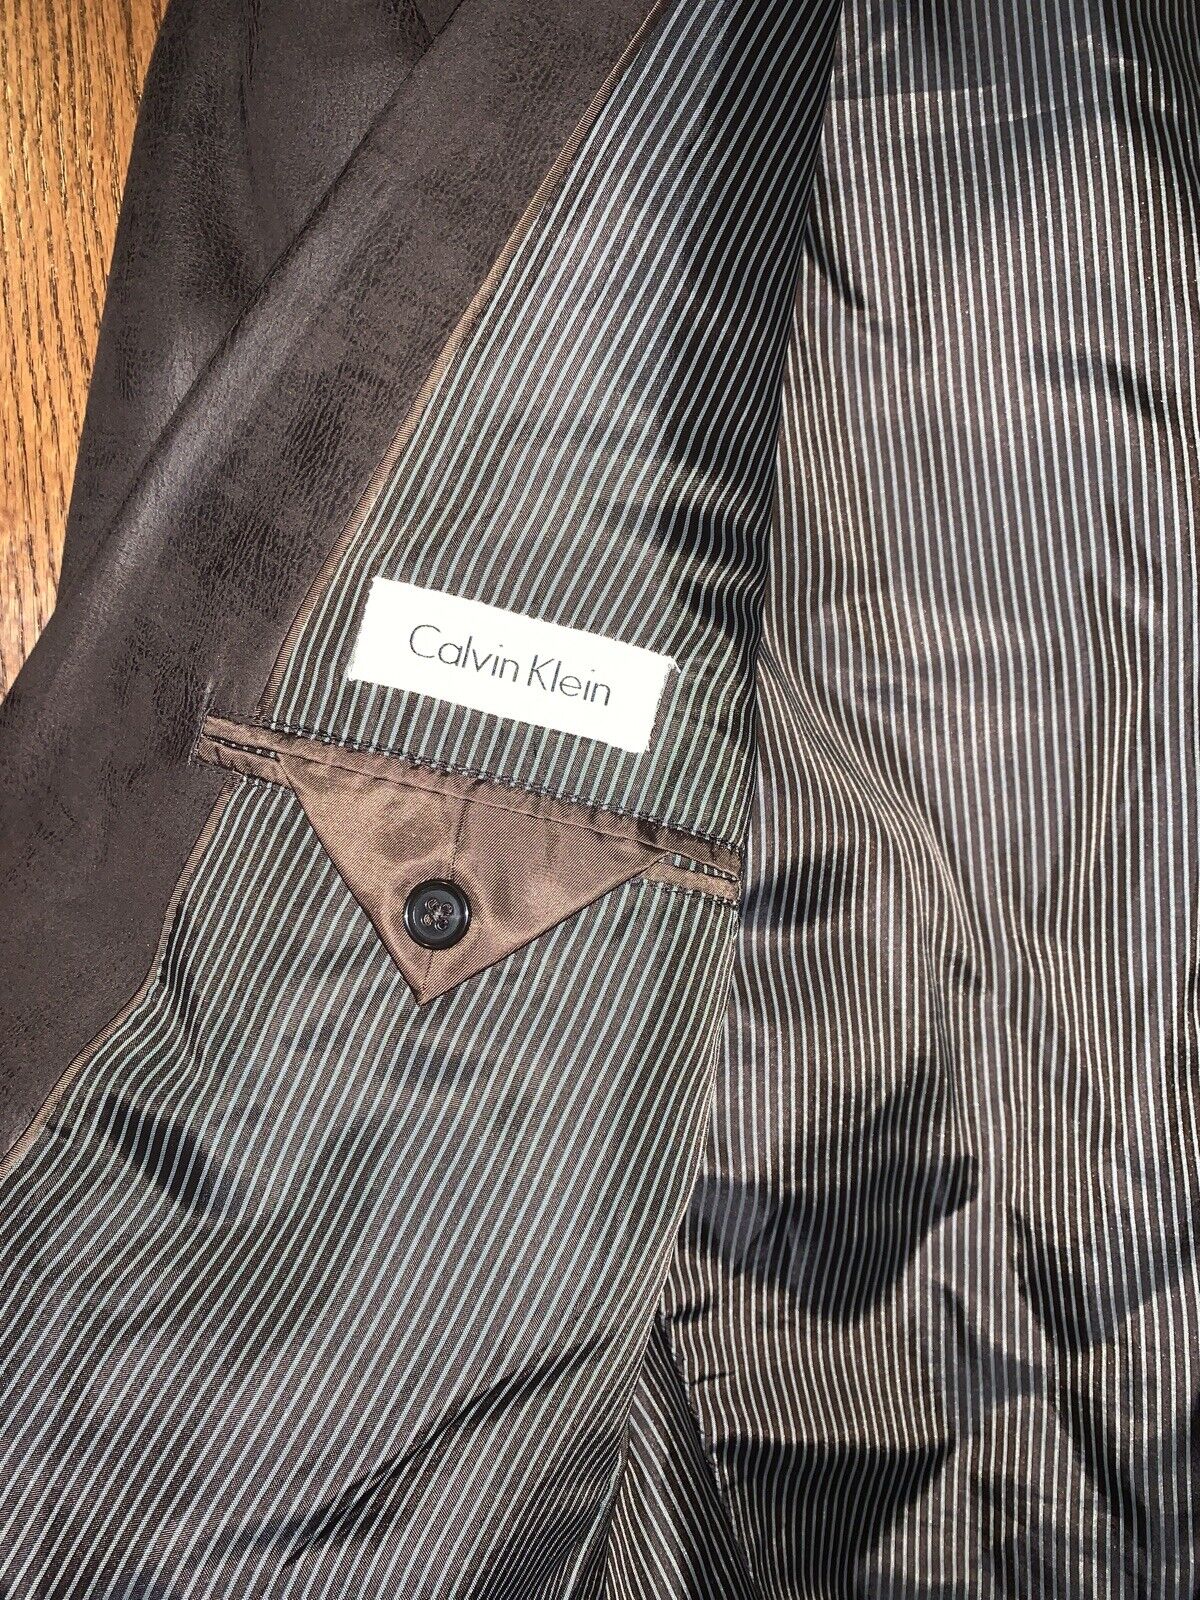 Calvin Klein Suit Jacket 46R Brown - image 2